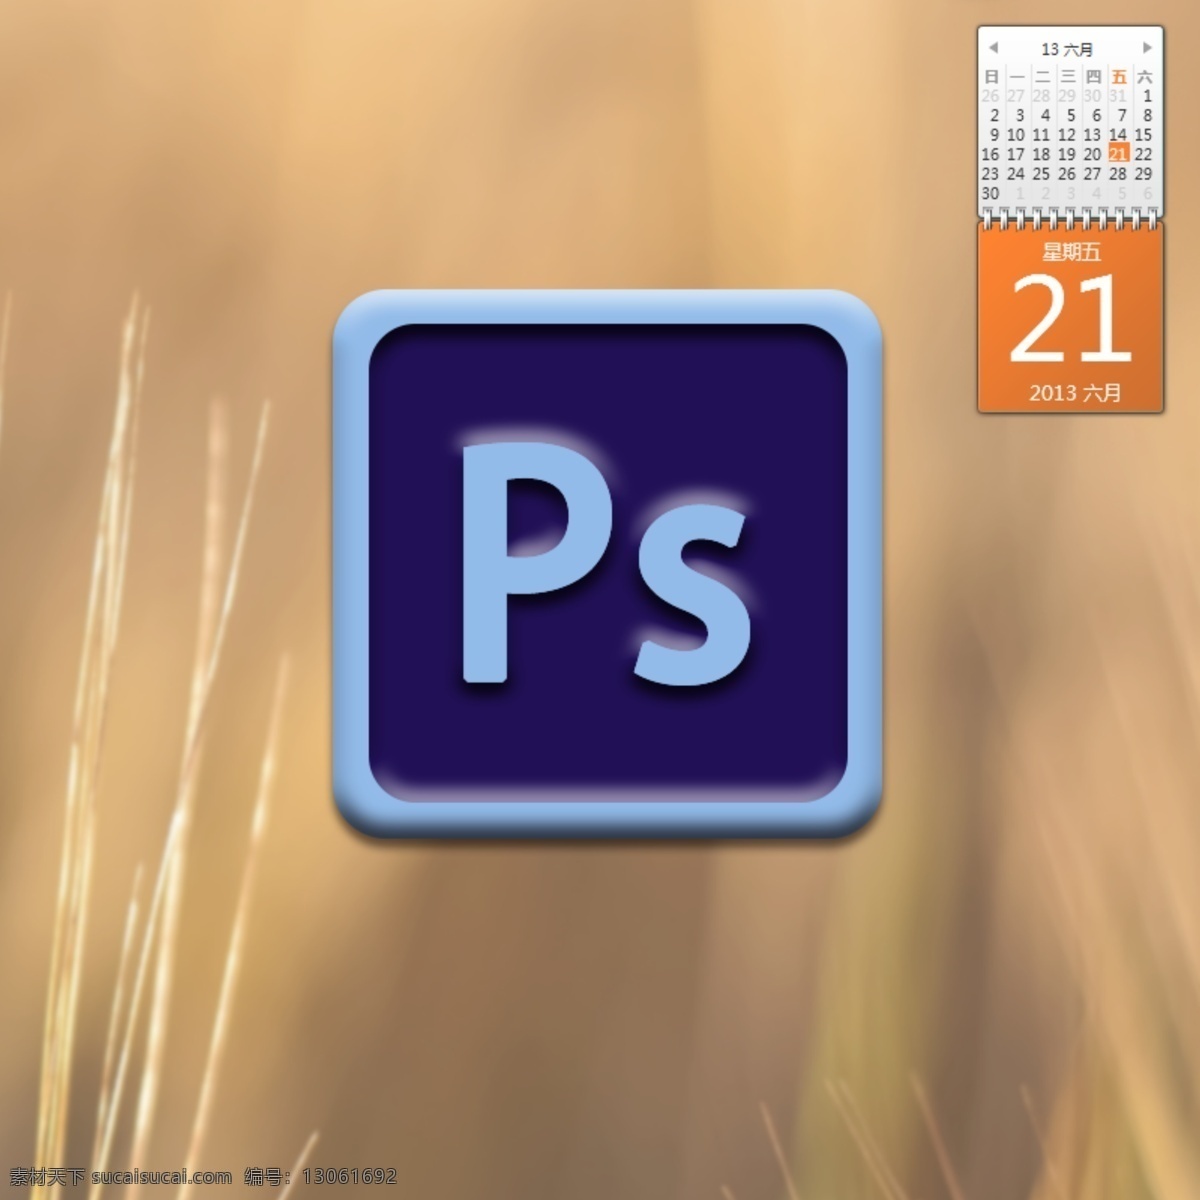 ps图标 ps 图标 icon 立体化 桌面 美化 日历立体 其他模板 网页模板 源文件